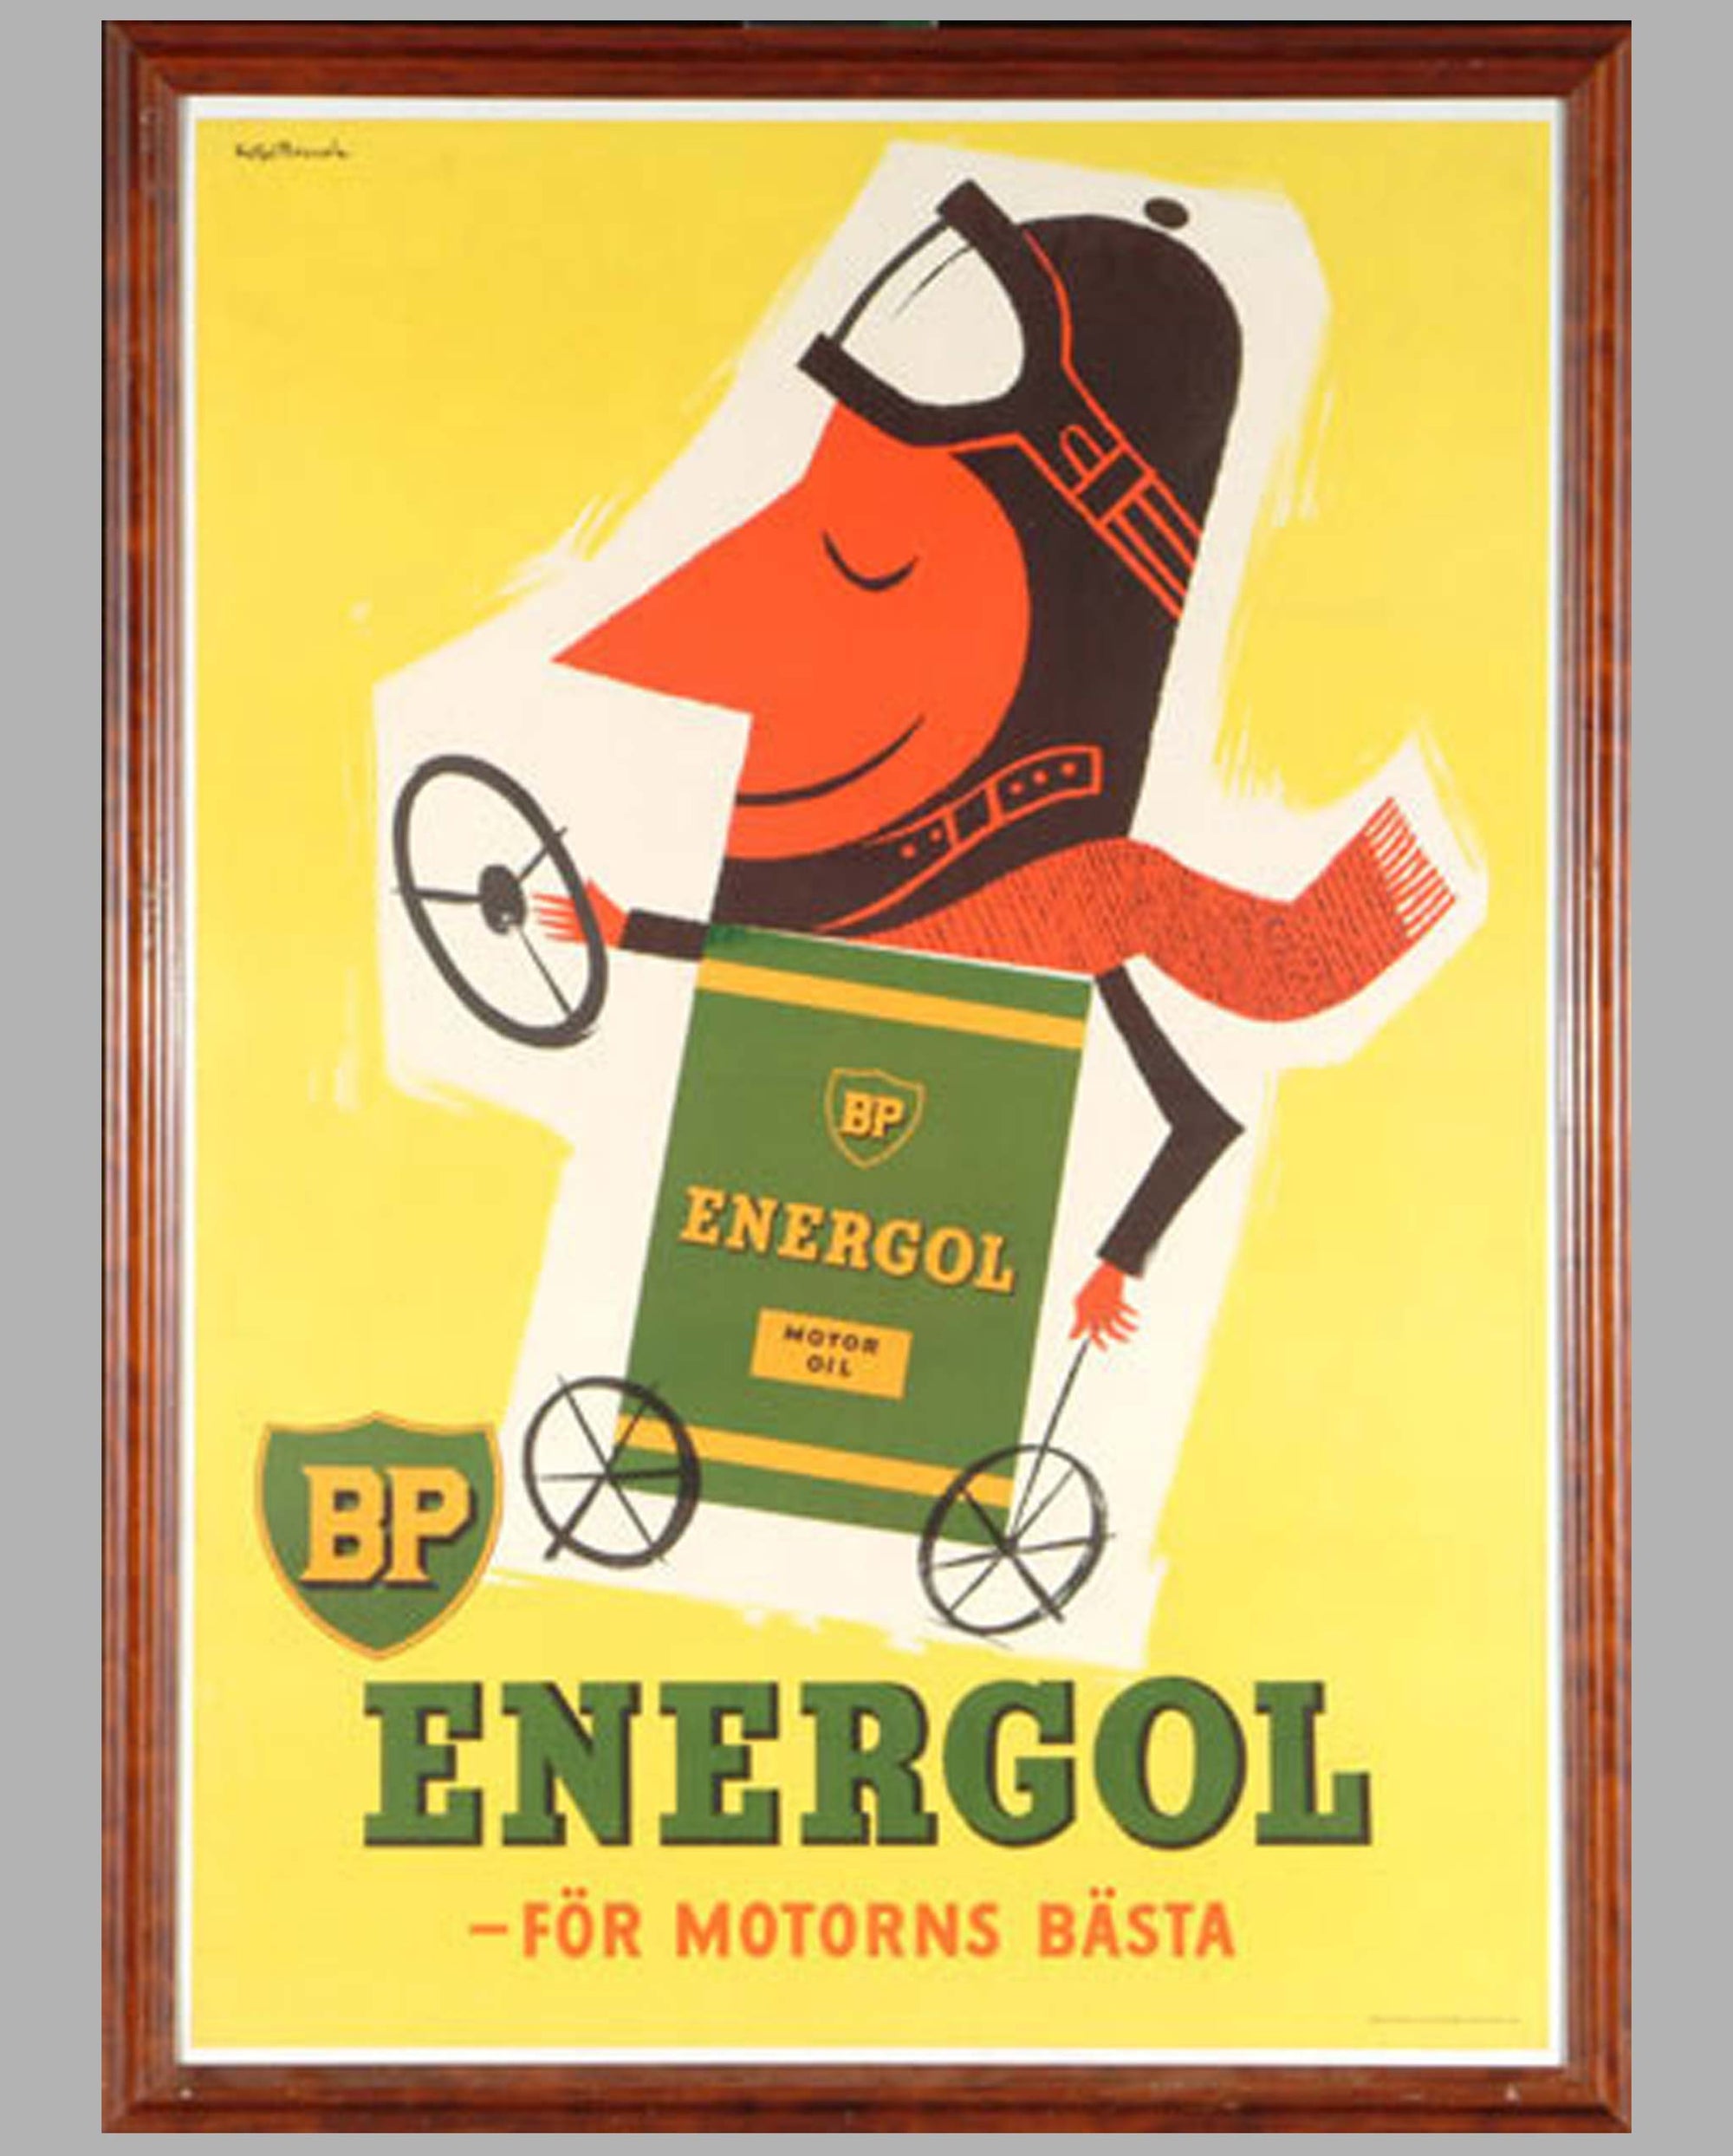 1953 BP Energol advertising poster